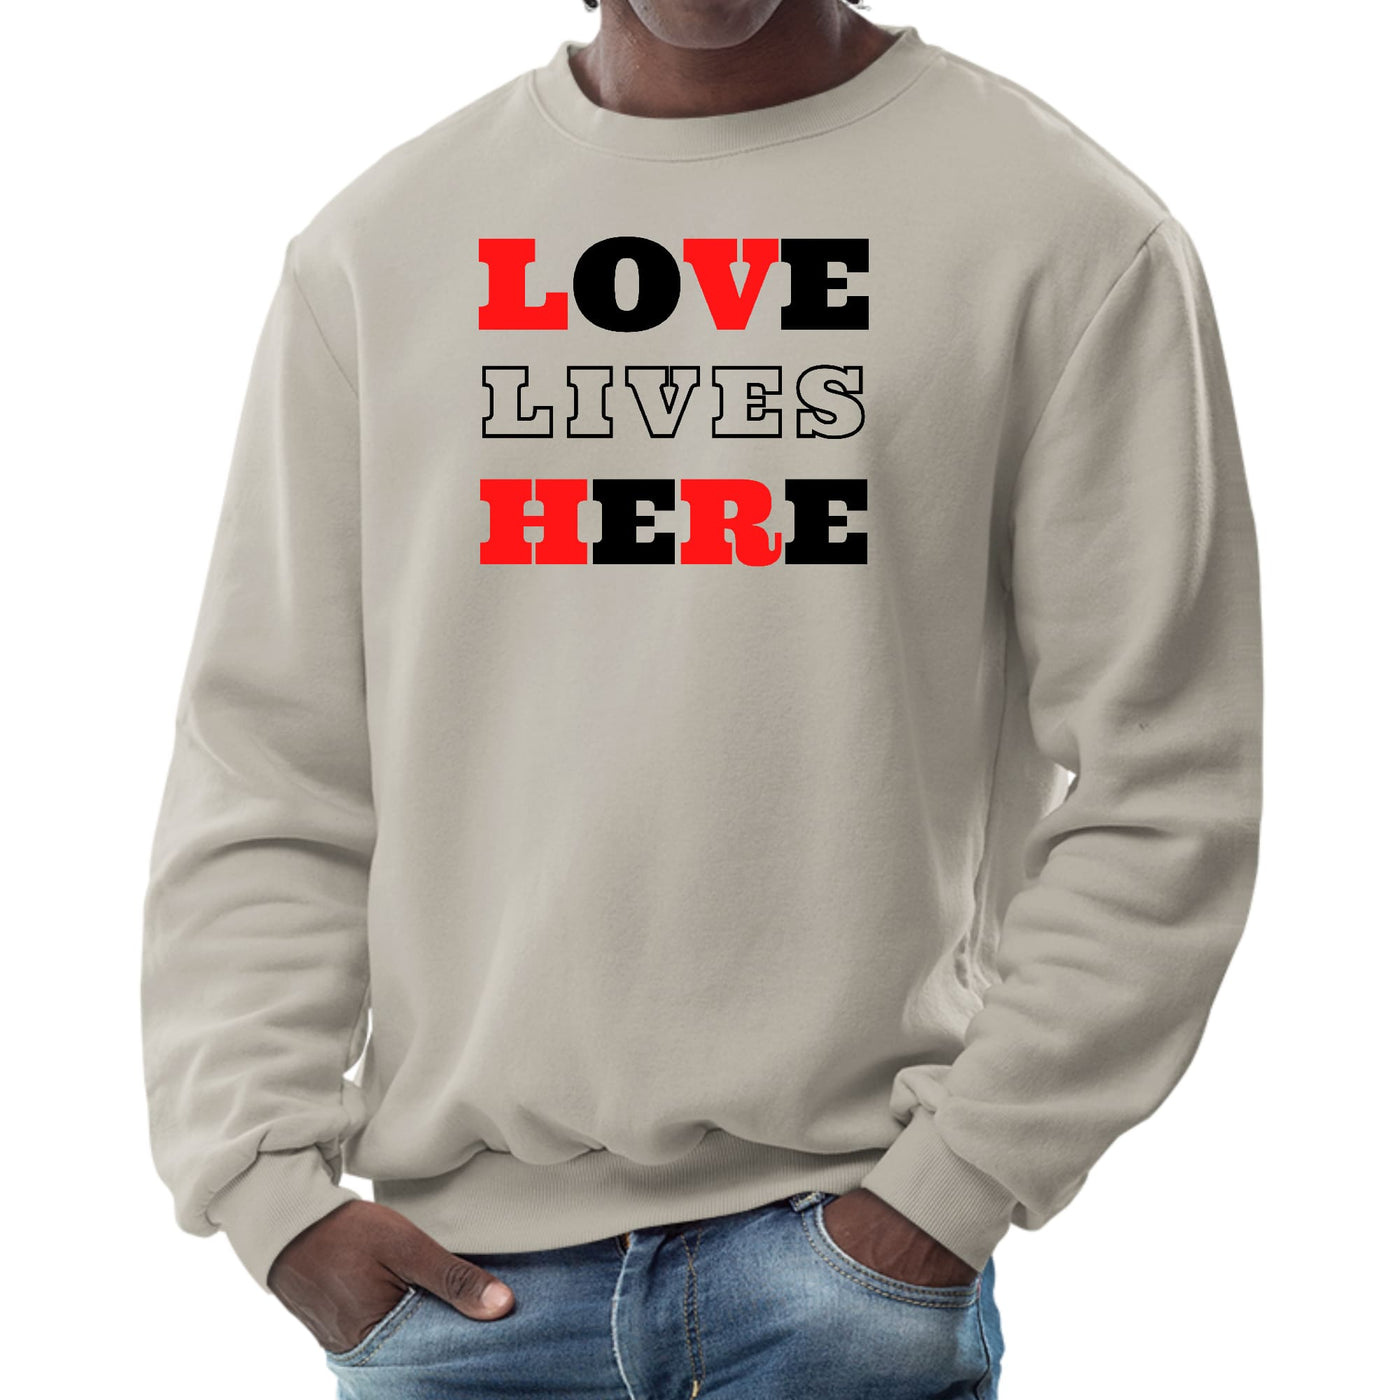 Mens Graphic Sweatshirt Love Lives Here Christian Red Black - Sweatshirts